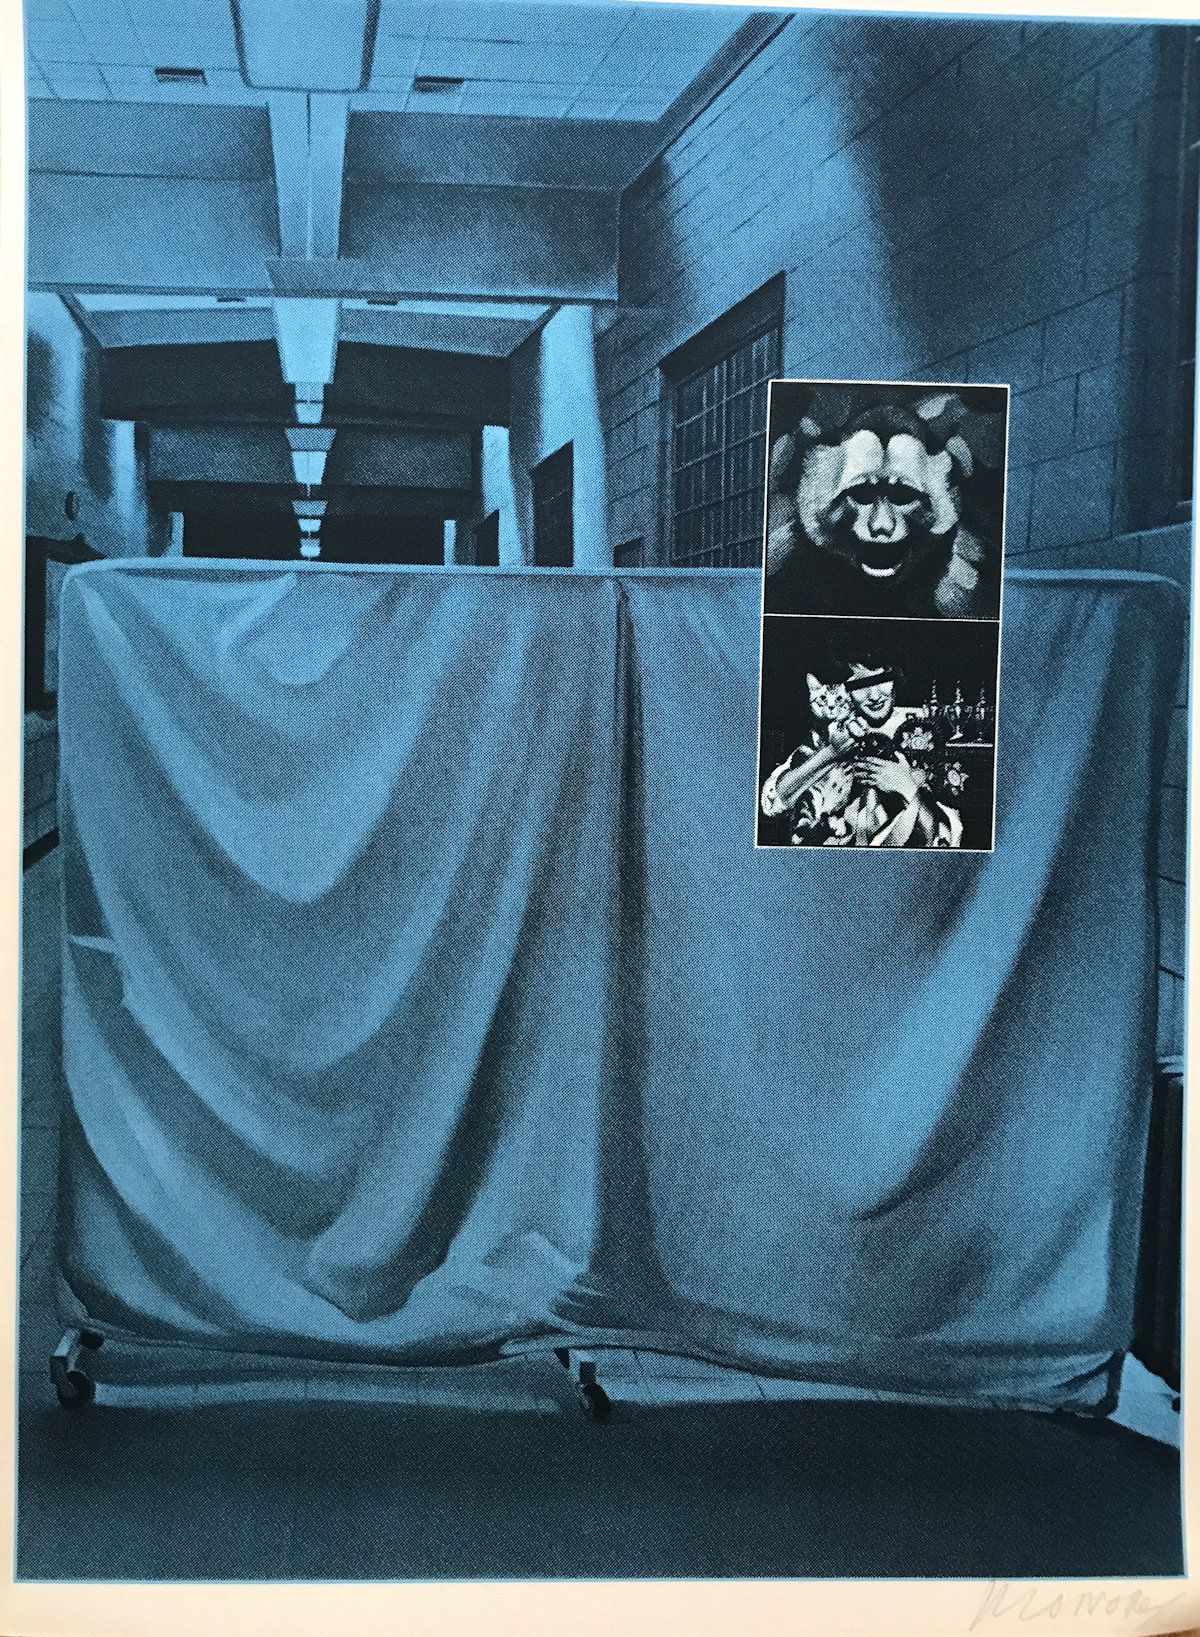 Jacques MONORY 雅克-莫诺里

 美国猴子，1976年

 

 用铅笔签名的绢印画

 纸质版300份。

 出版商 : Philippe Le&hellip;